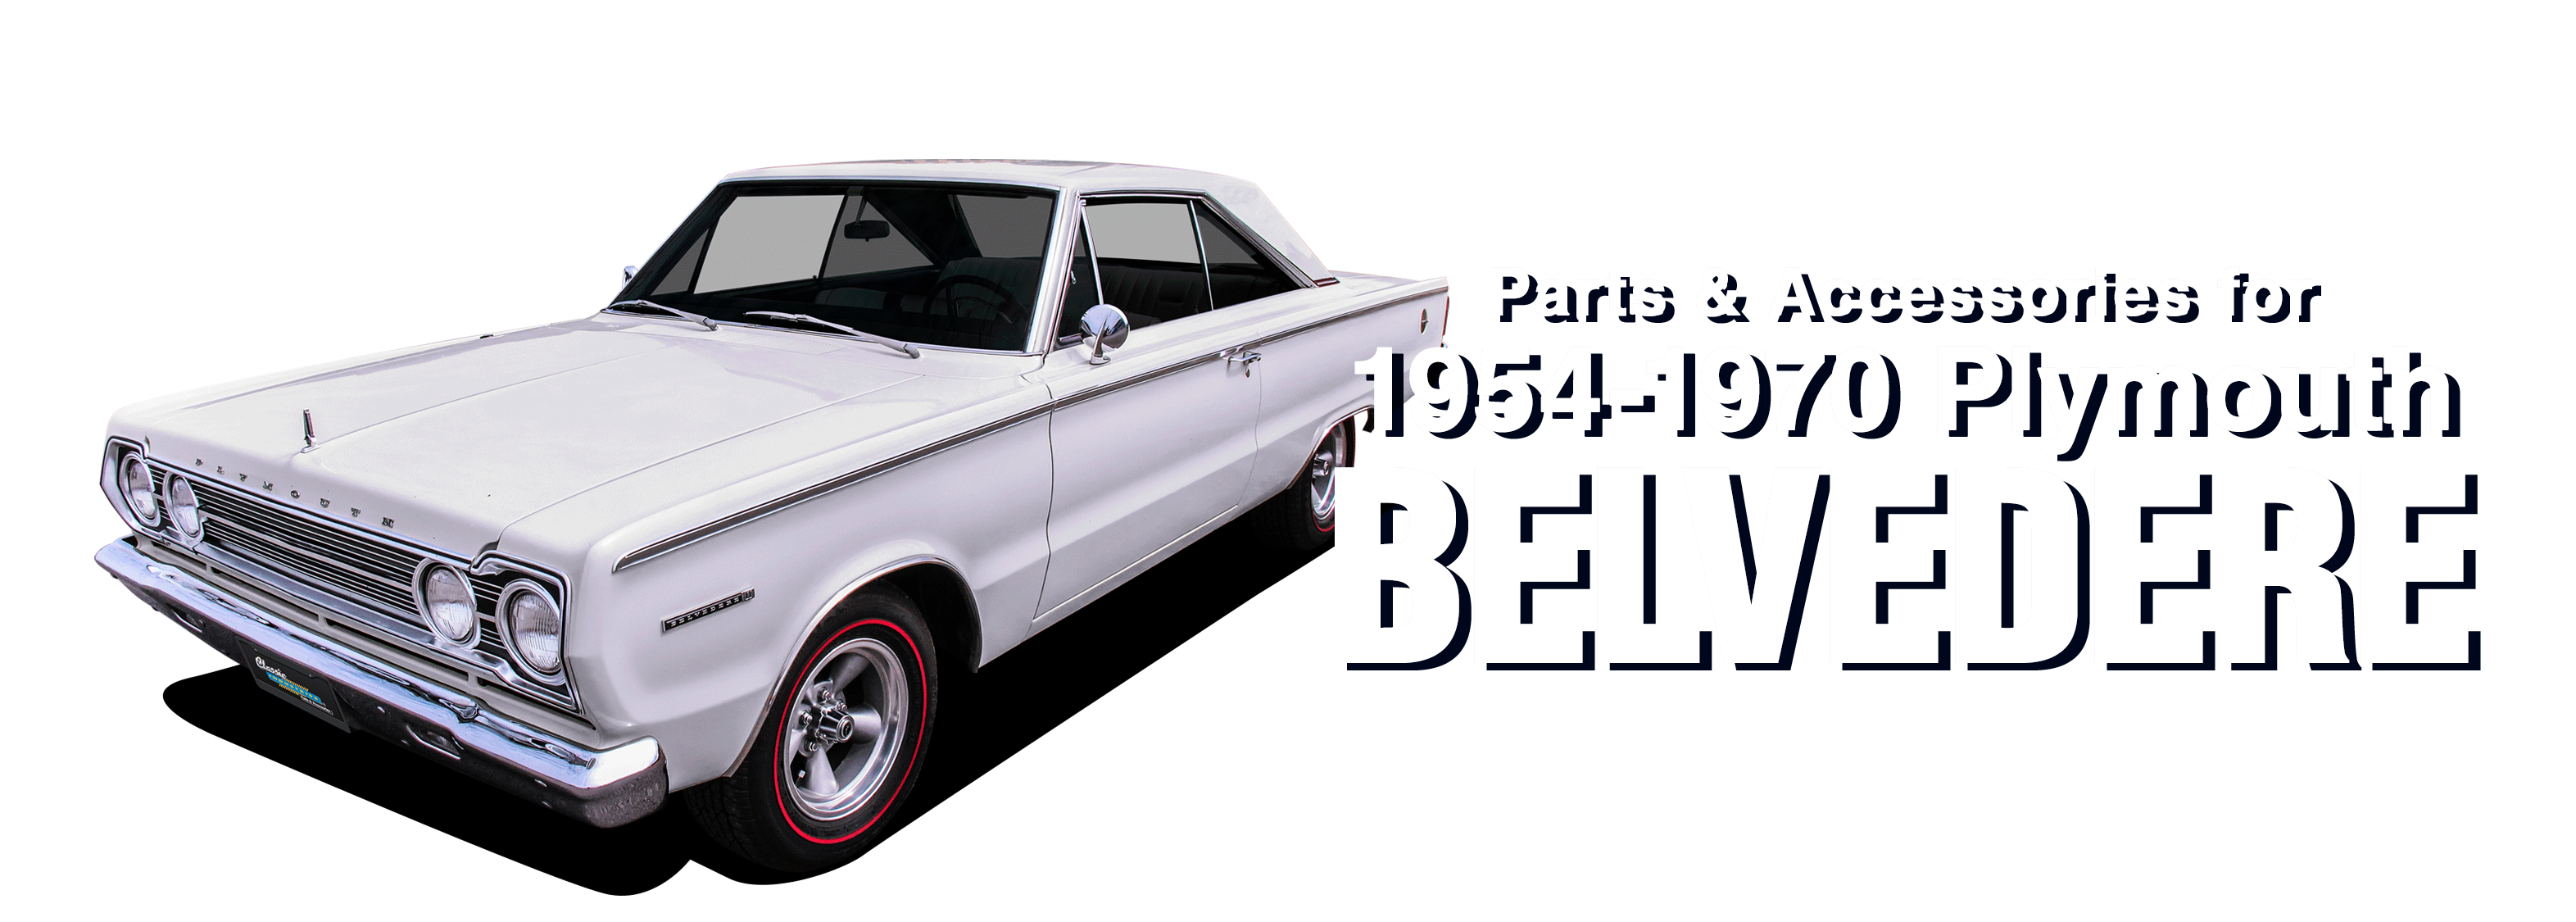 Plymouth-Belvedere-vehicle-desktop